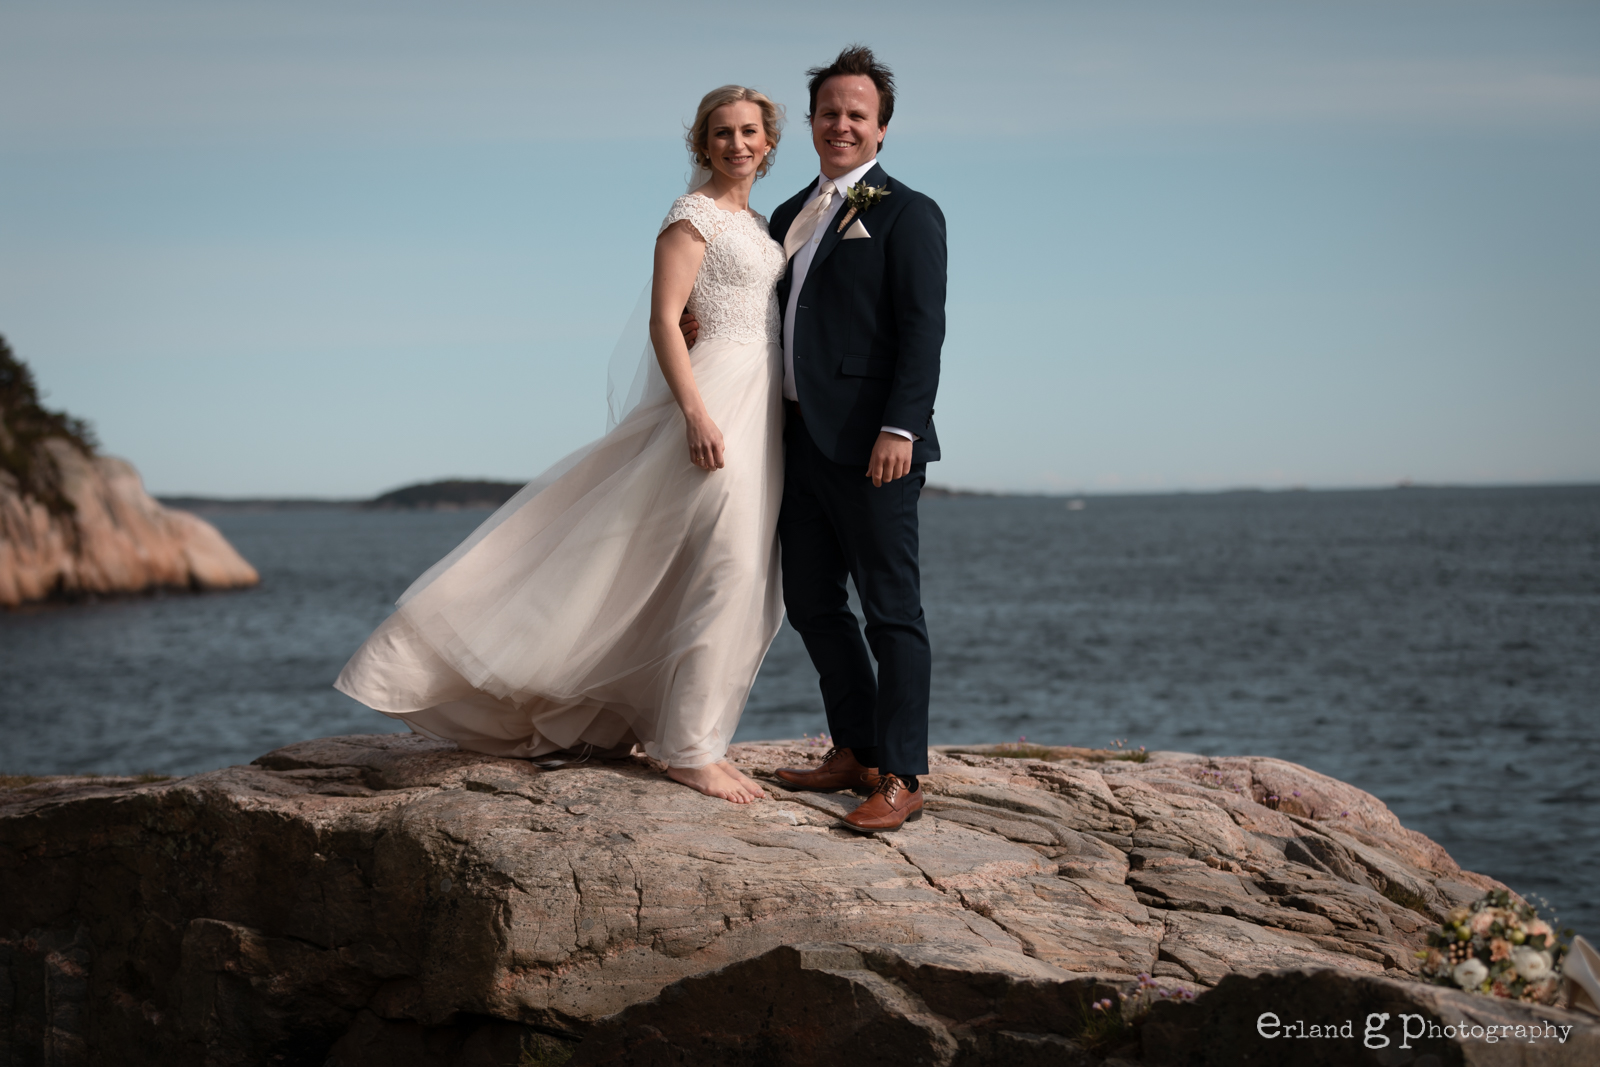 Bryllupsfotografering ved Odderøya fyr